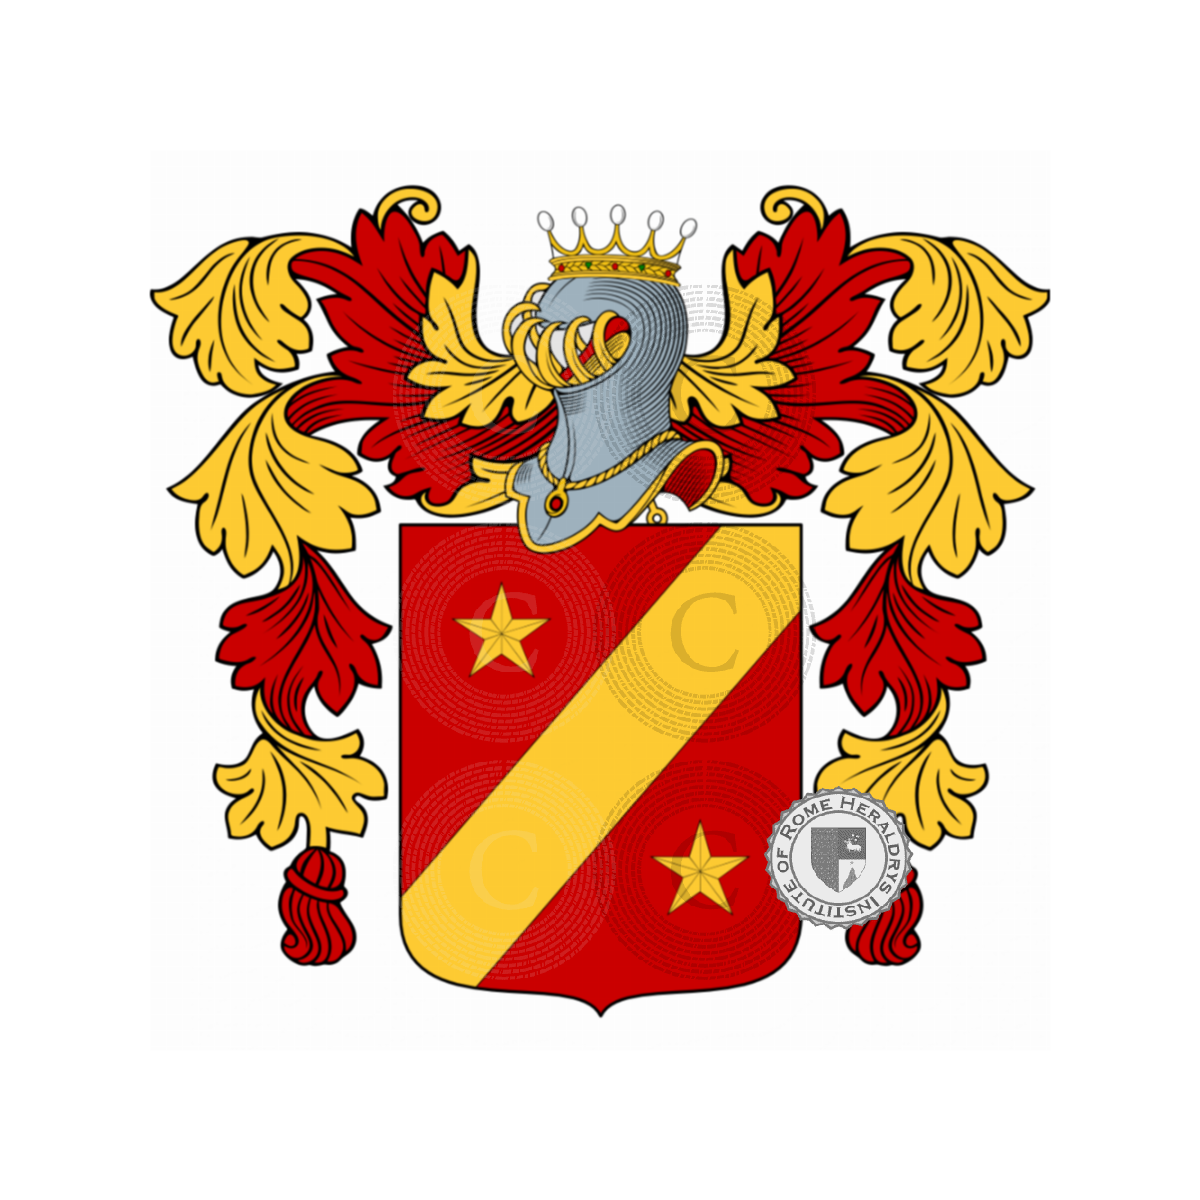 Wappen der FamilieVella, Vela,Vella Comitini,Vella Varrios